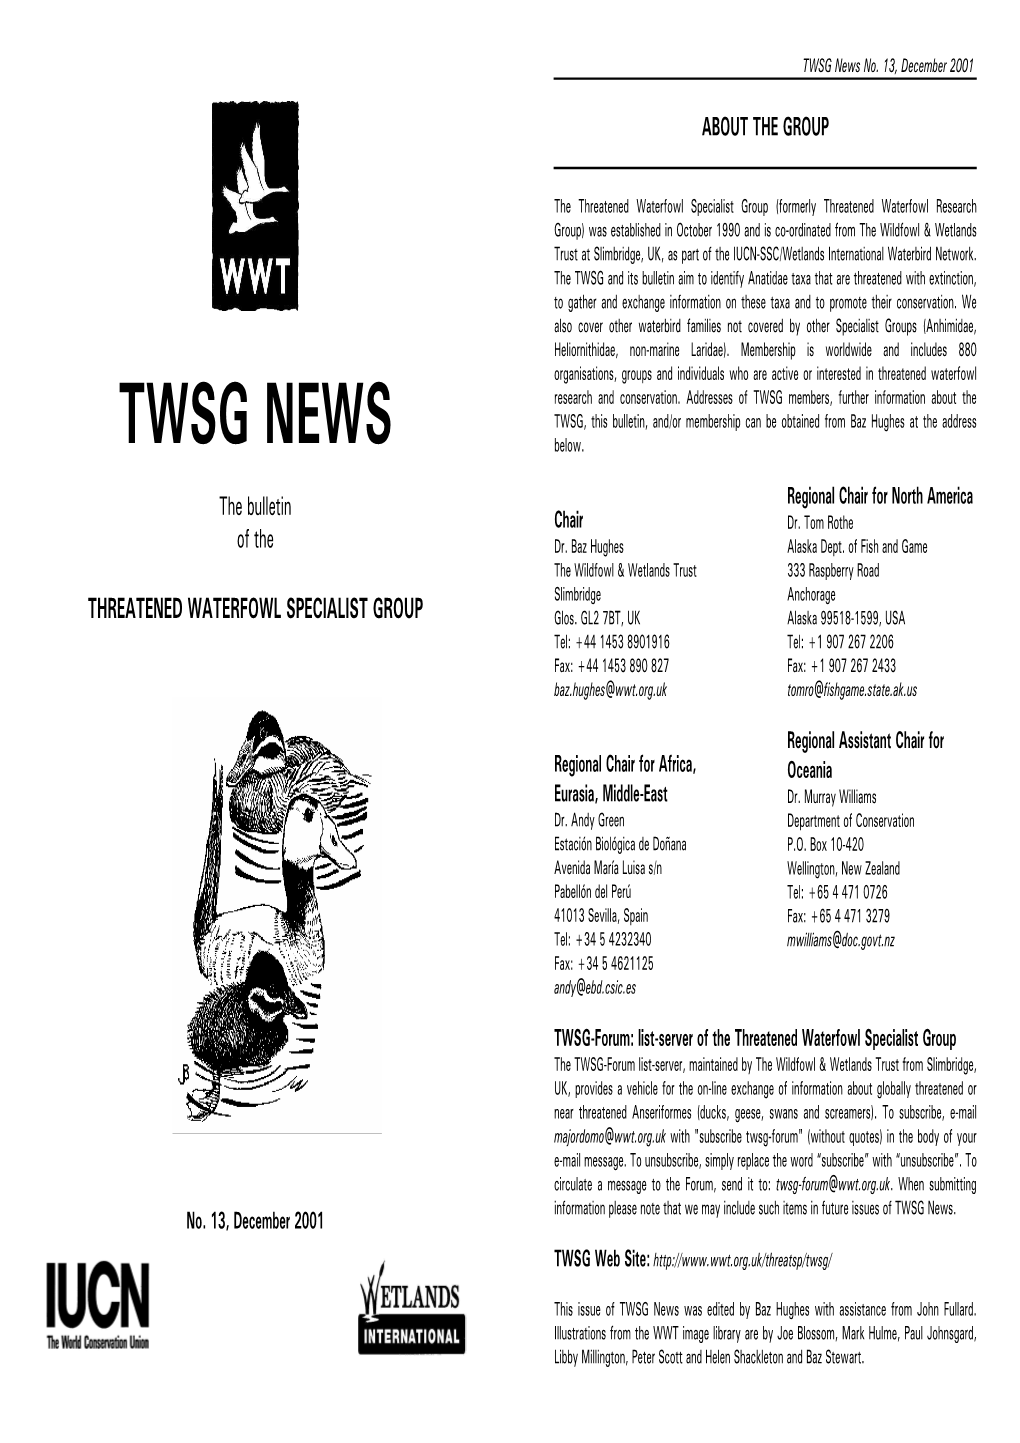 TWSG News 13